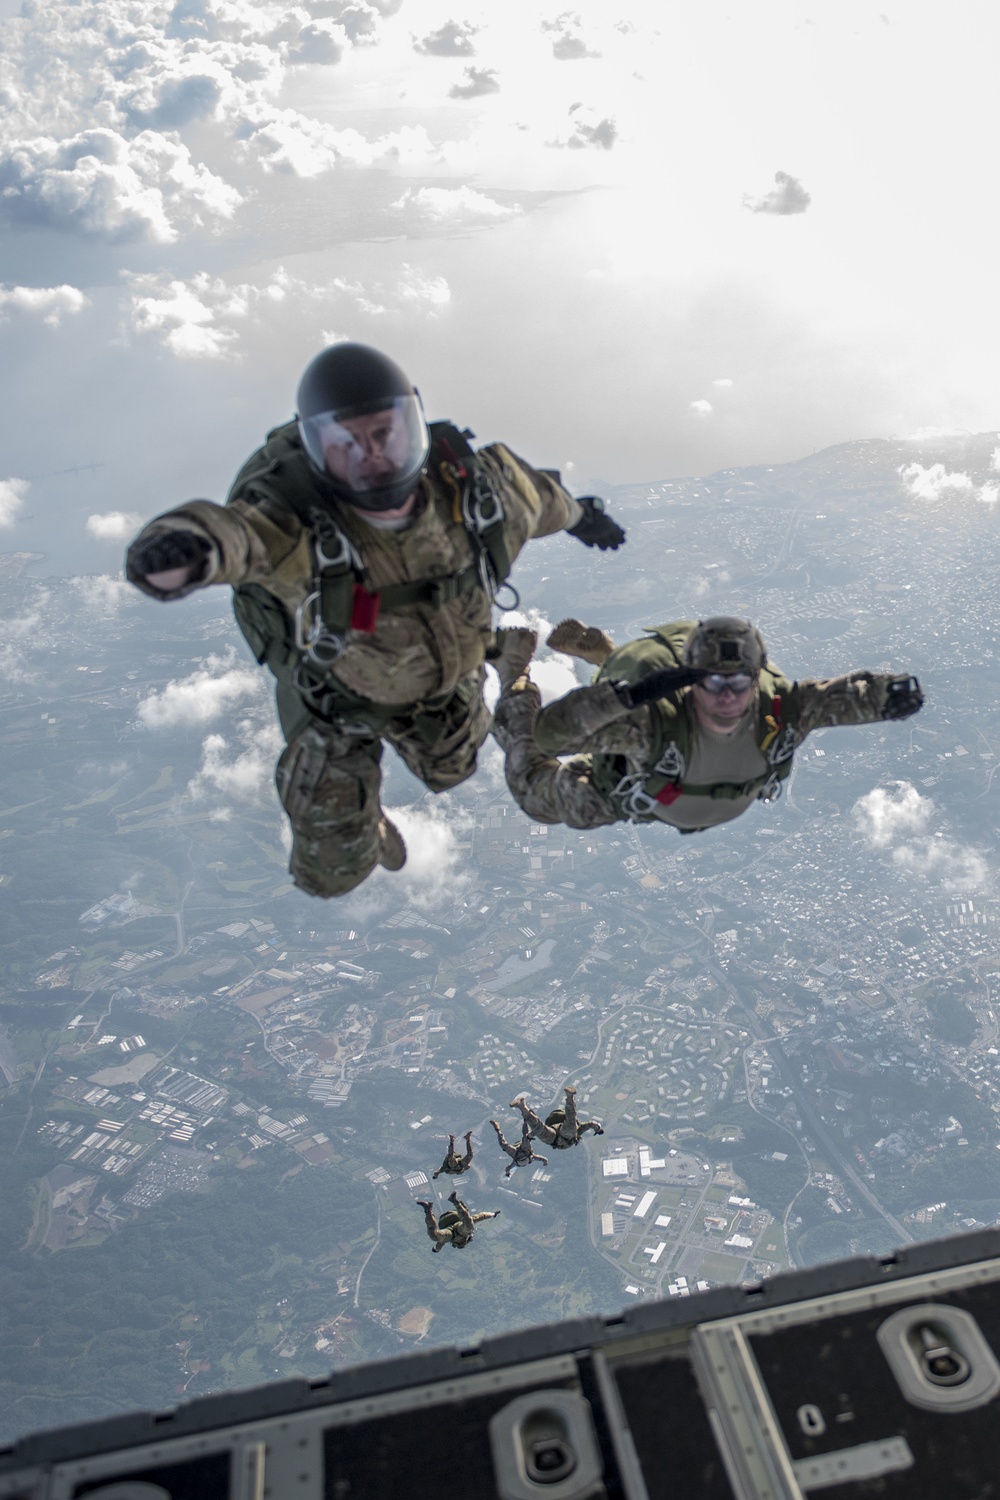 USAF, USA members maintain jump proficiency